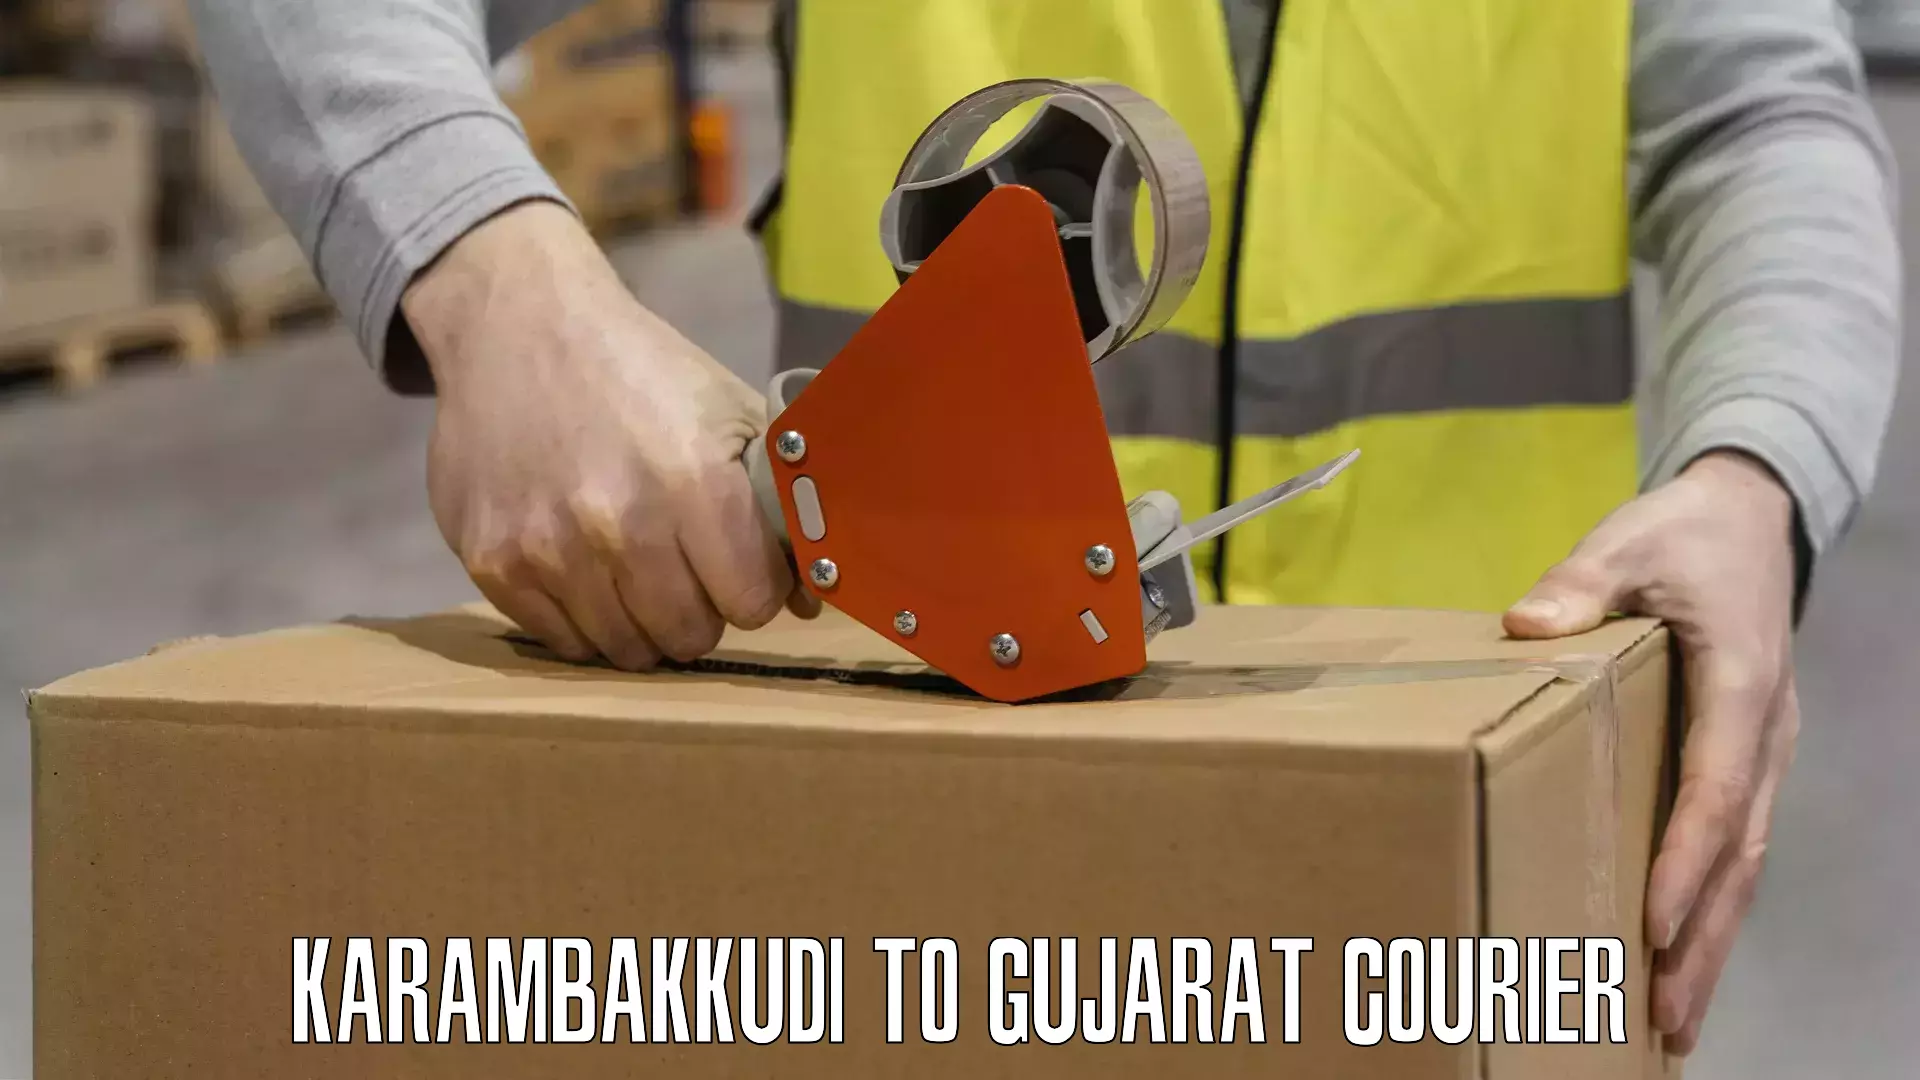 Easy access courier services Karambakkudi to Gujarat